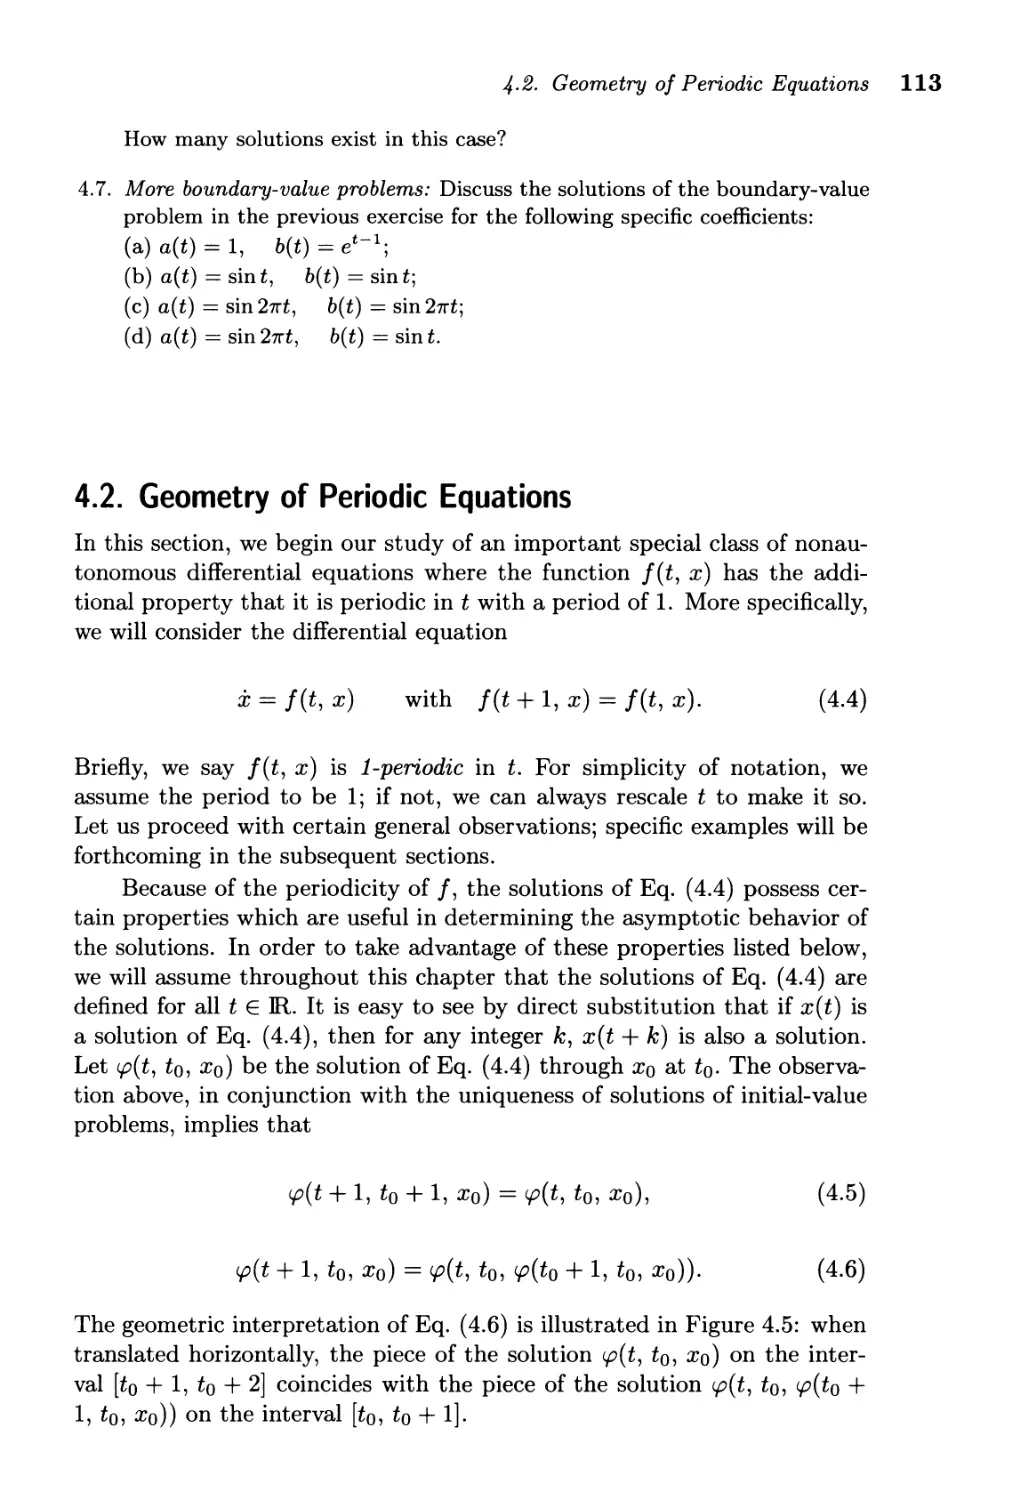 4.2. Geometry of Periodic Equations